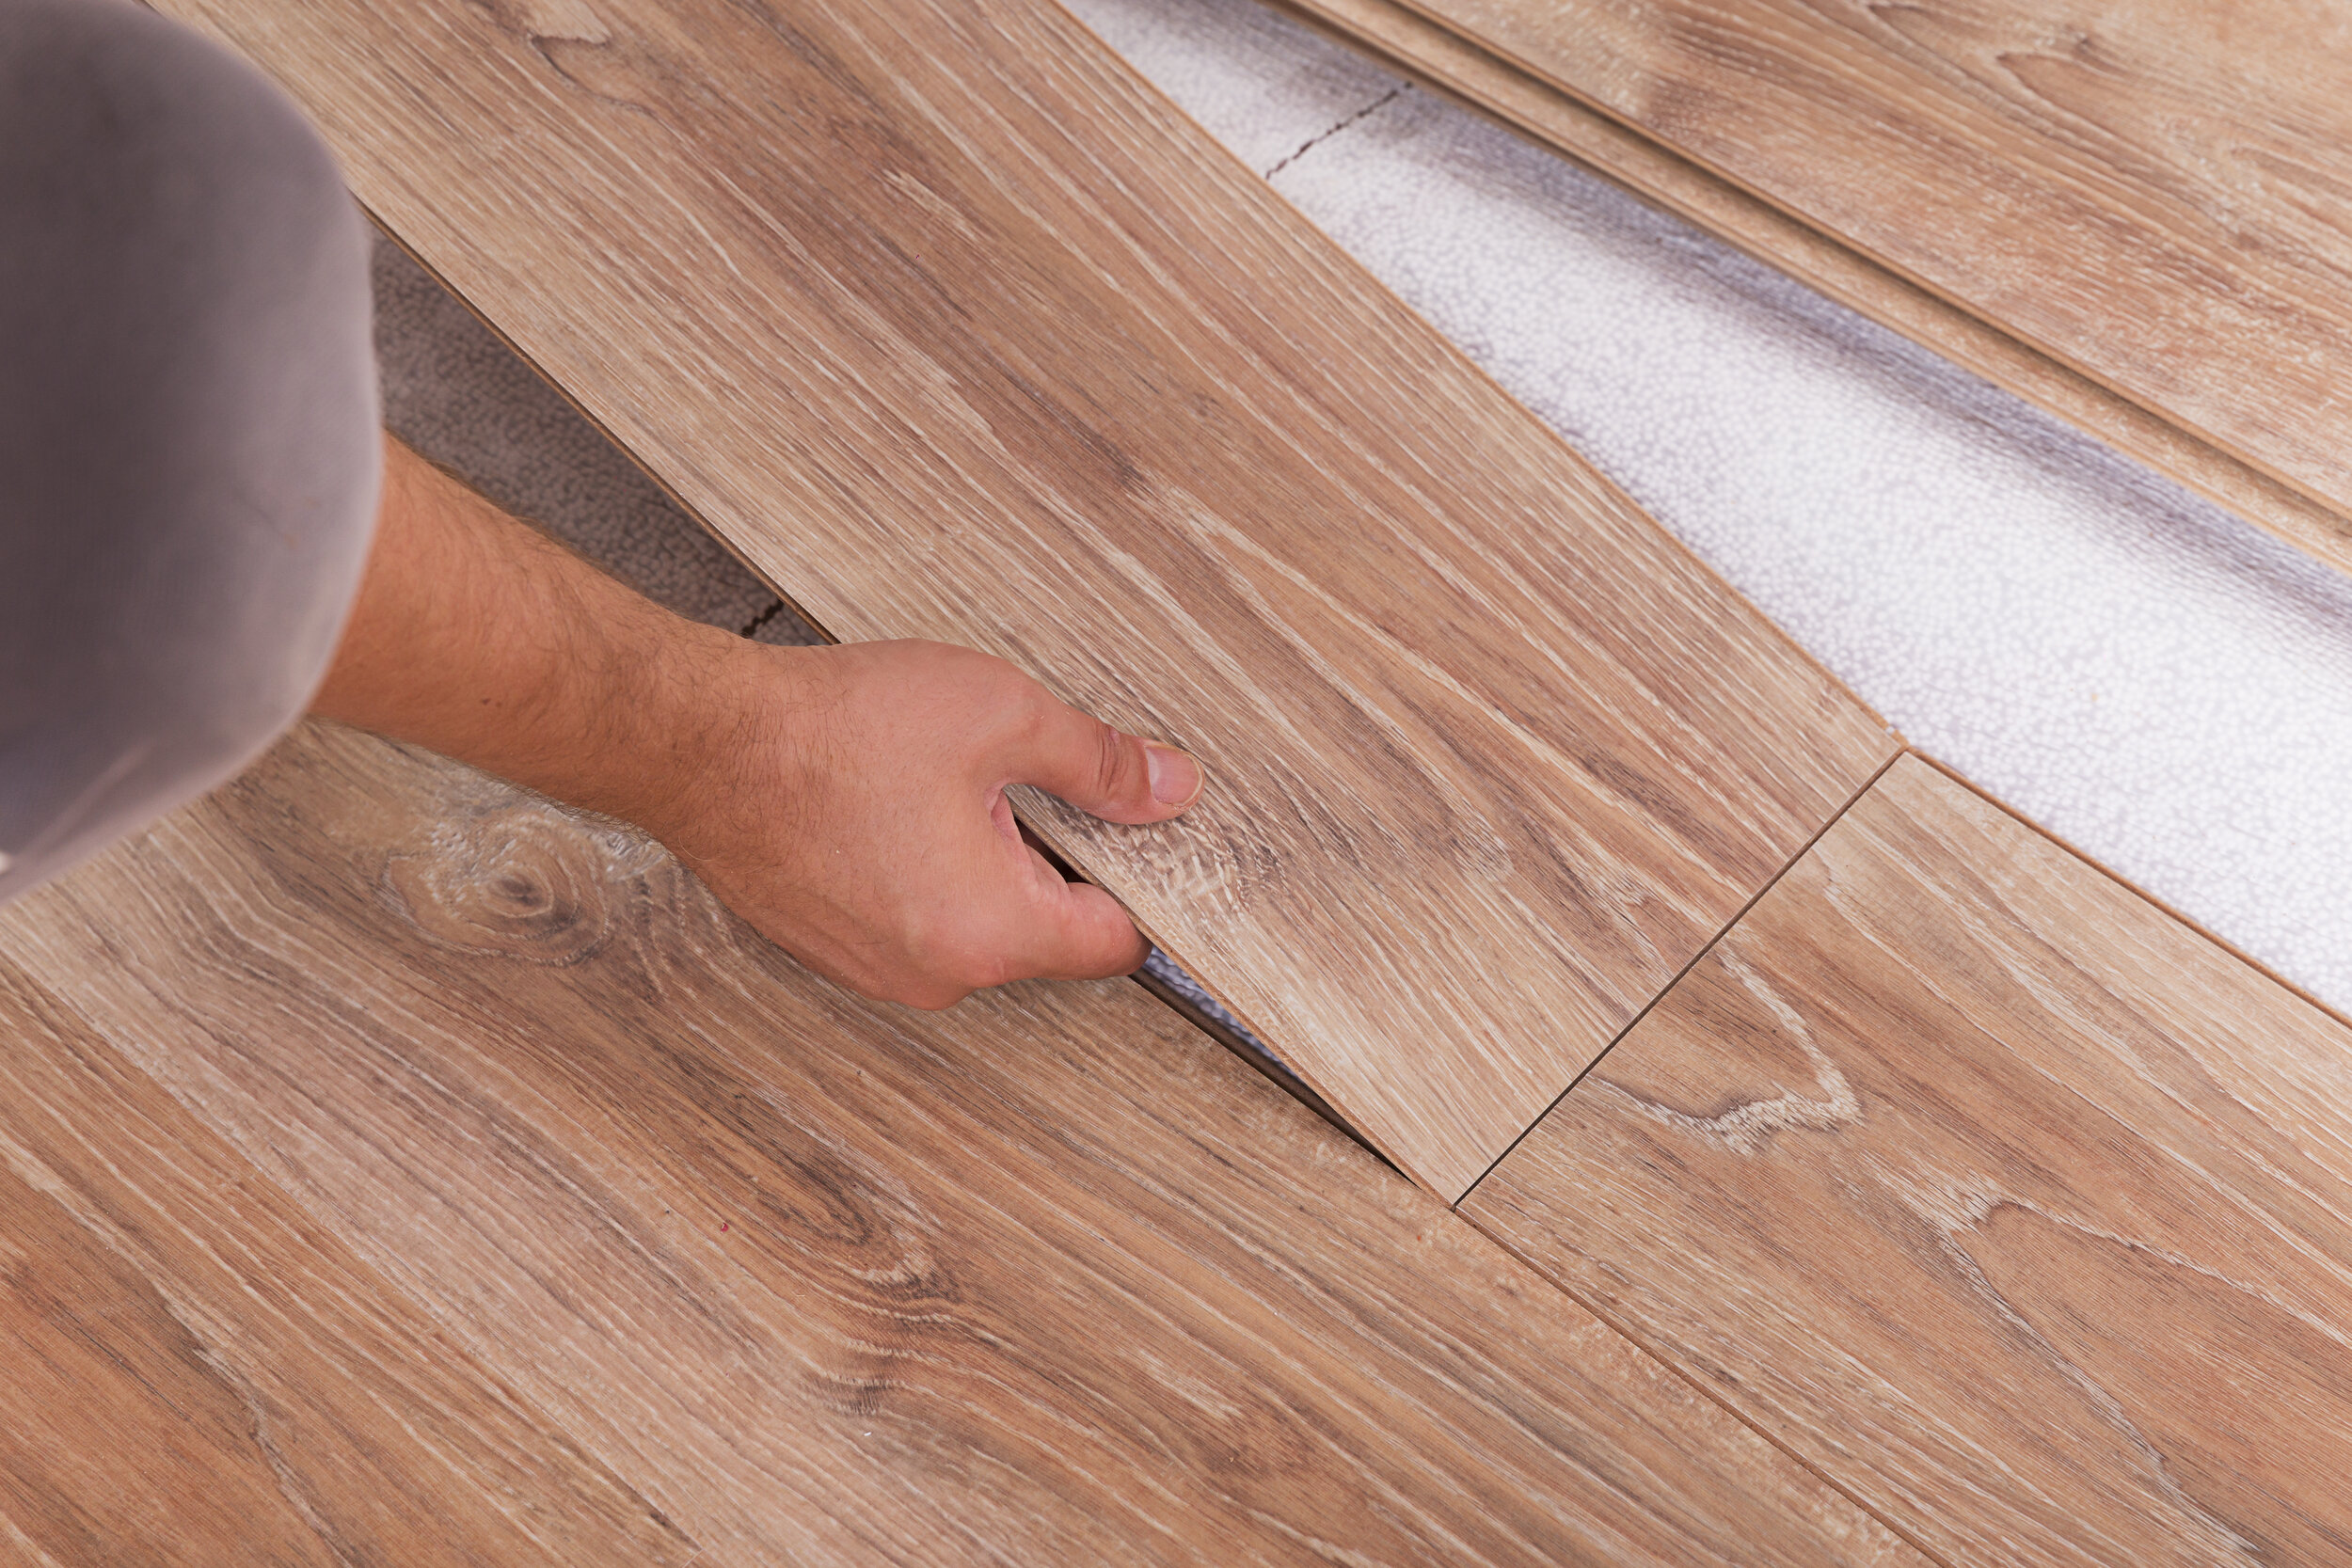 Waterproof Laminate Flooring, How To Install Waterproof Laminate Flooring On Concrete